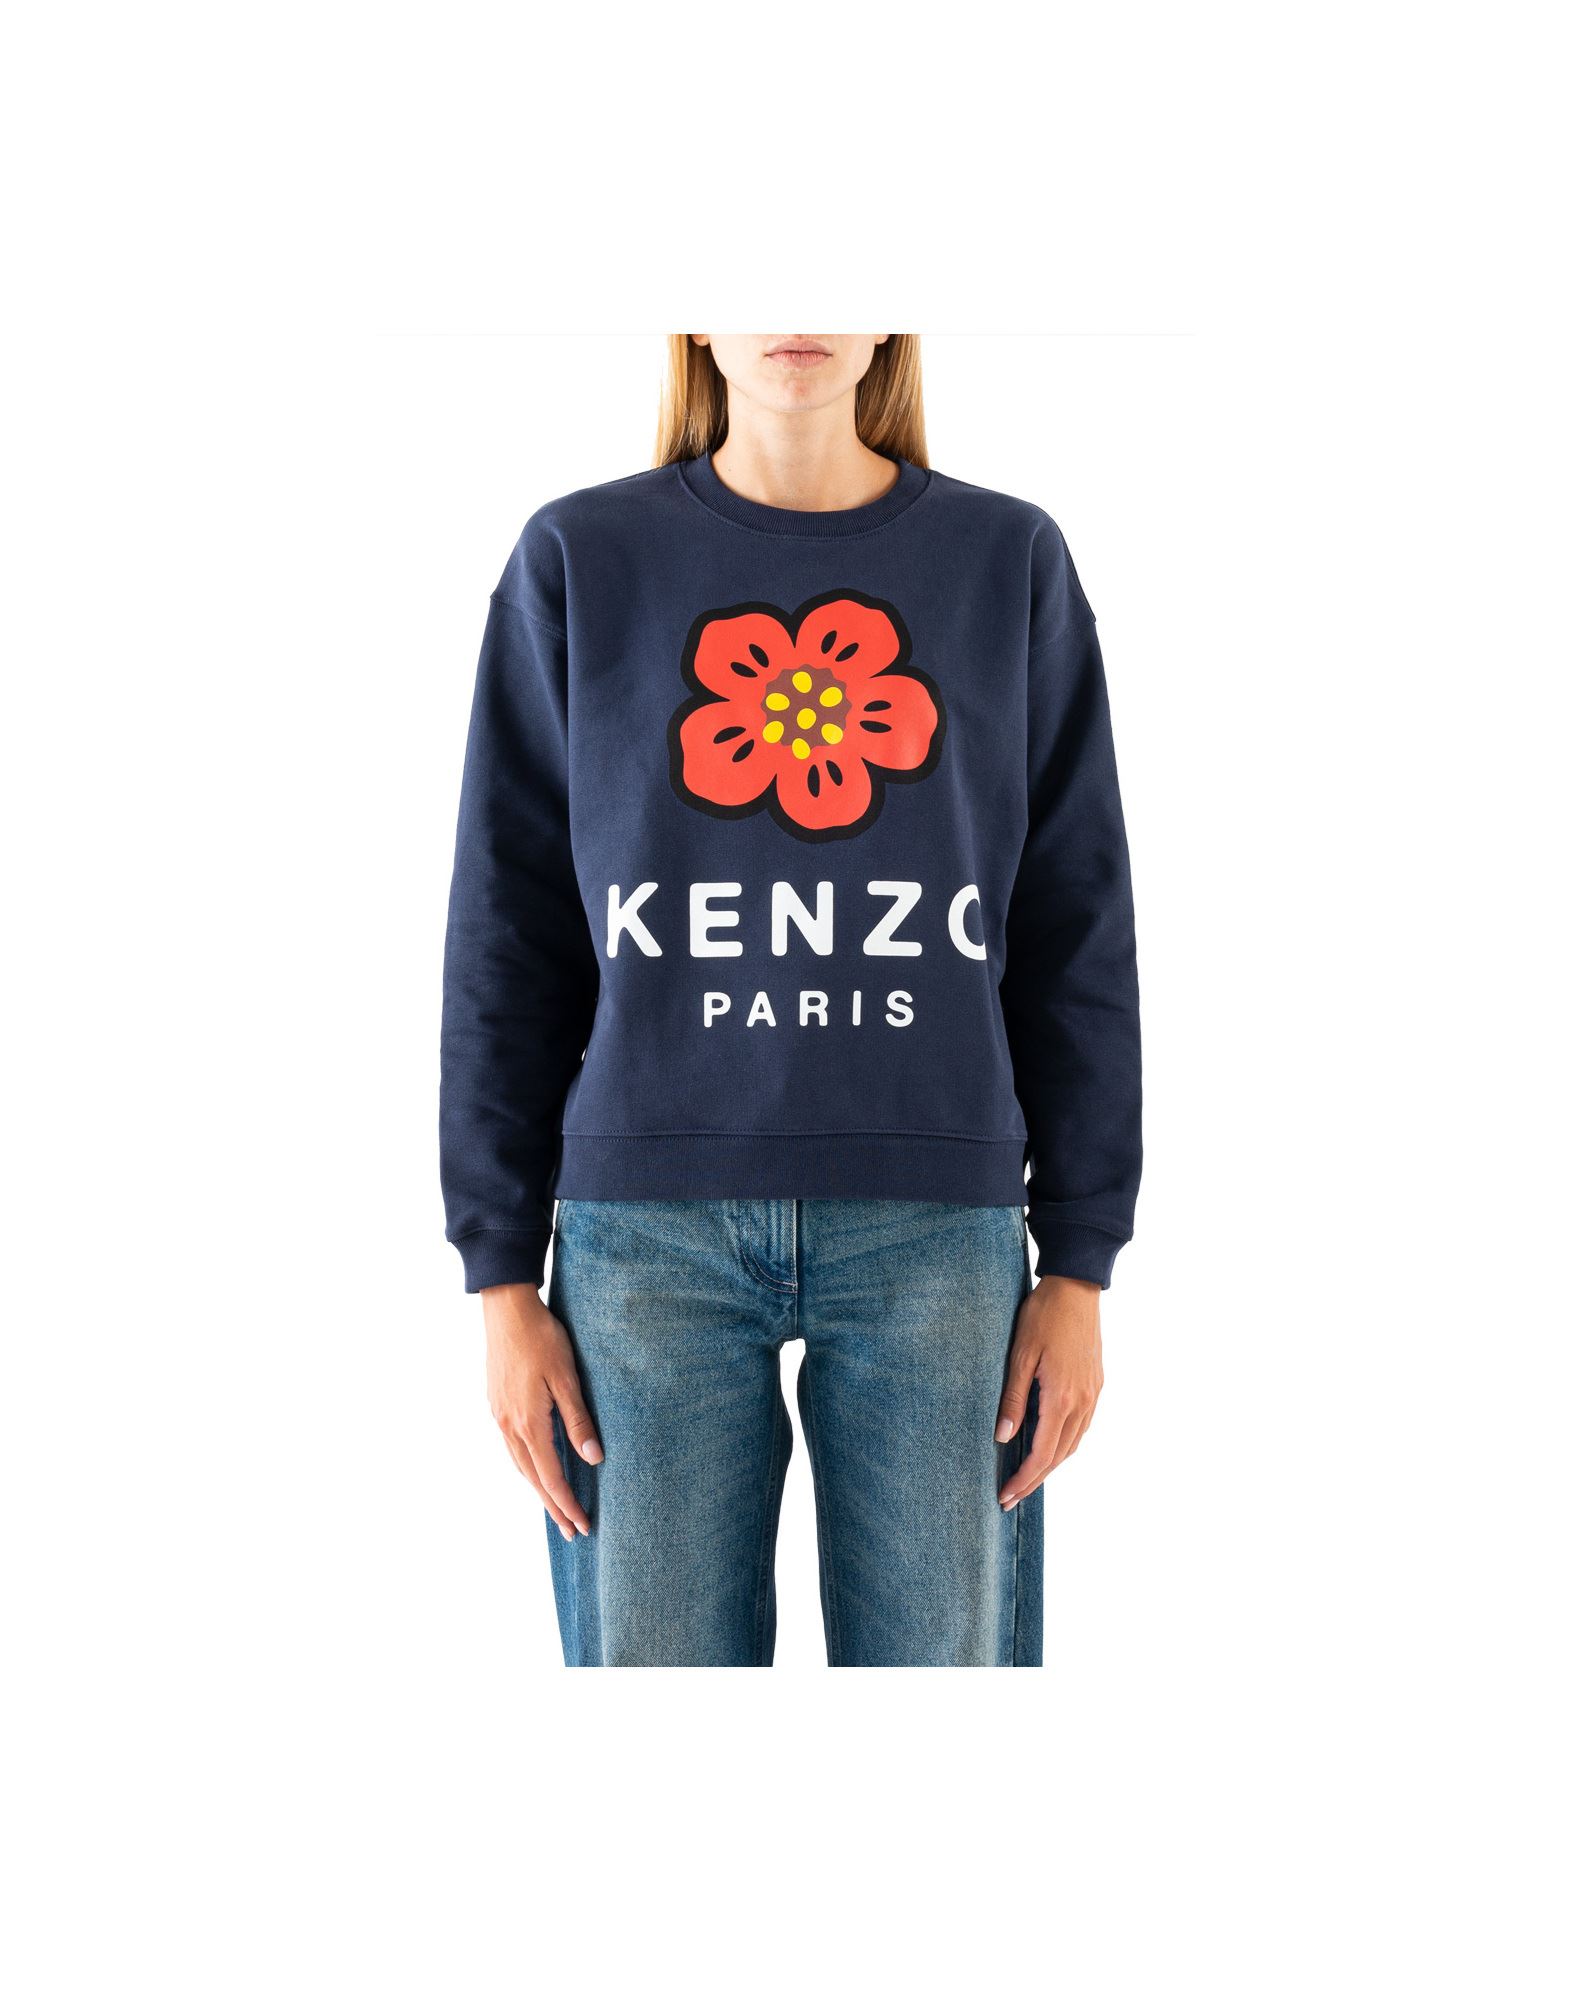 KENZO Sweatshirt Damen Blau von KENZO